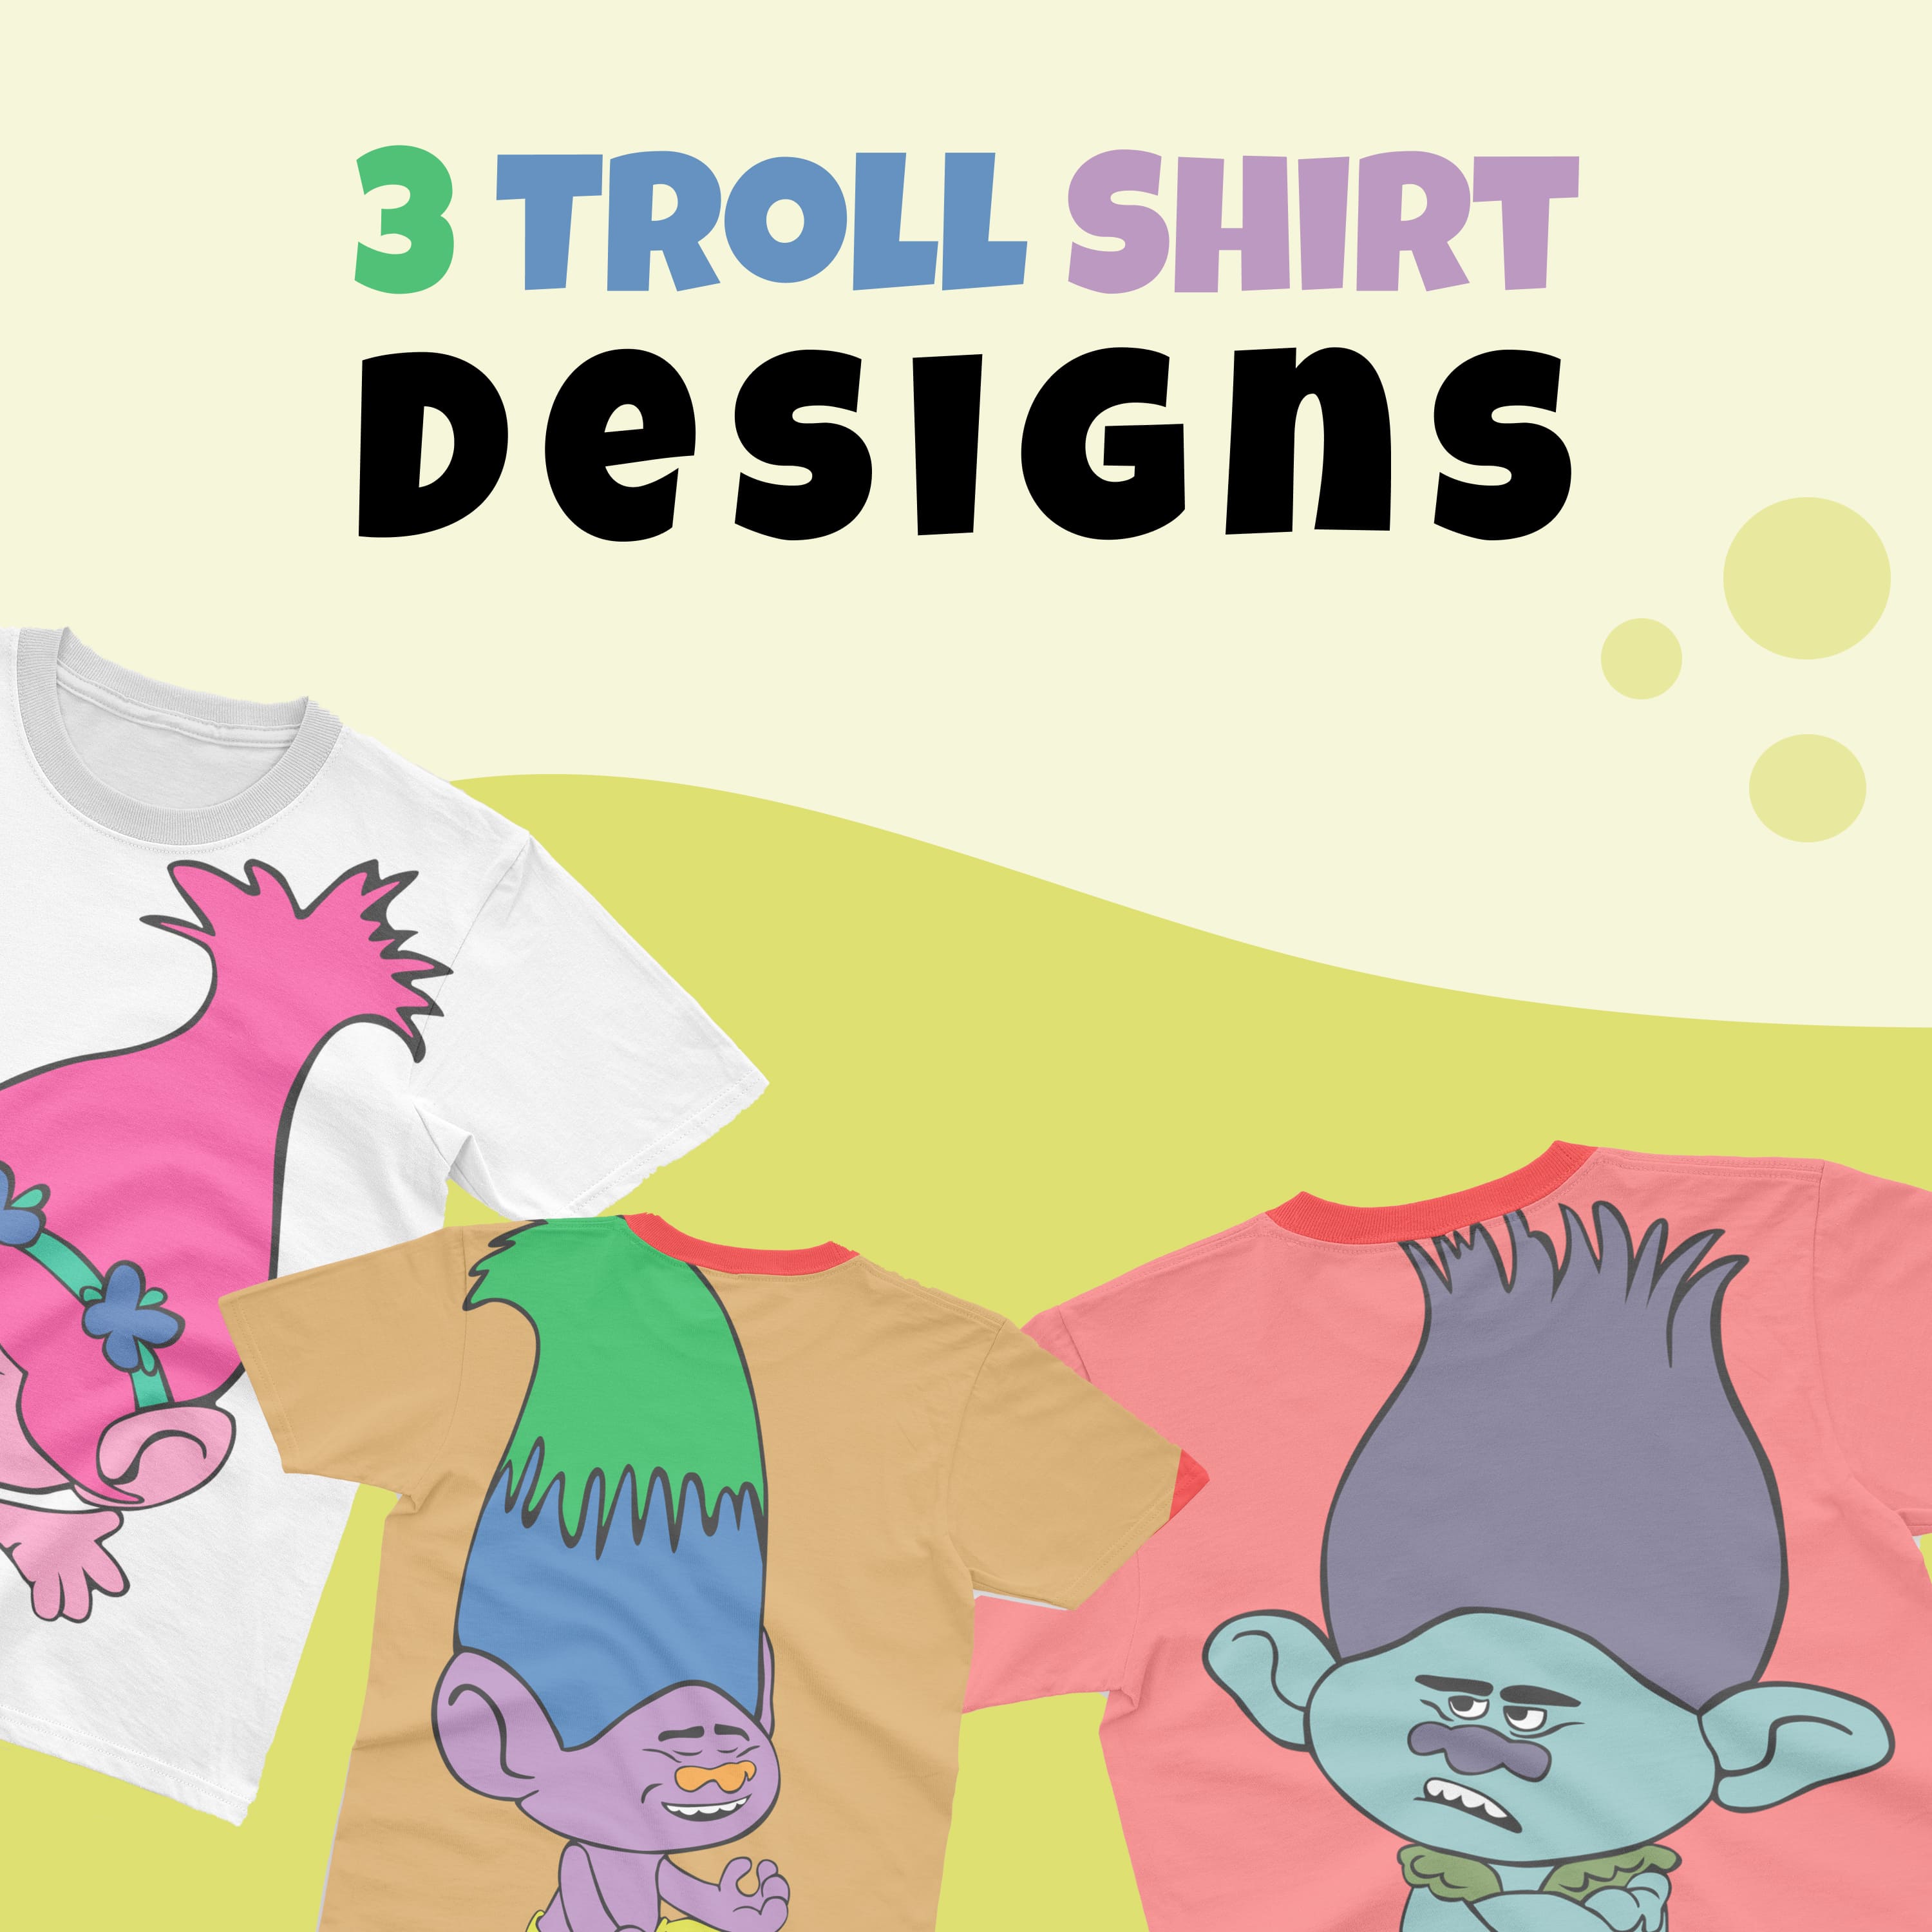 Prints of 3 Troll Shirt Designs.